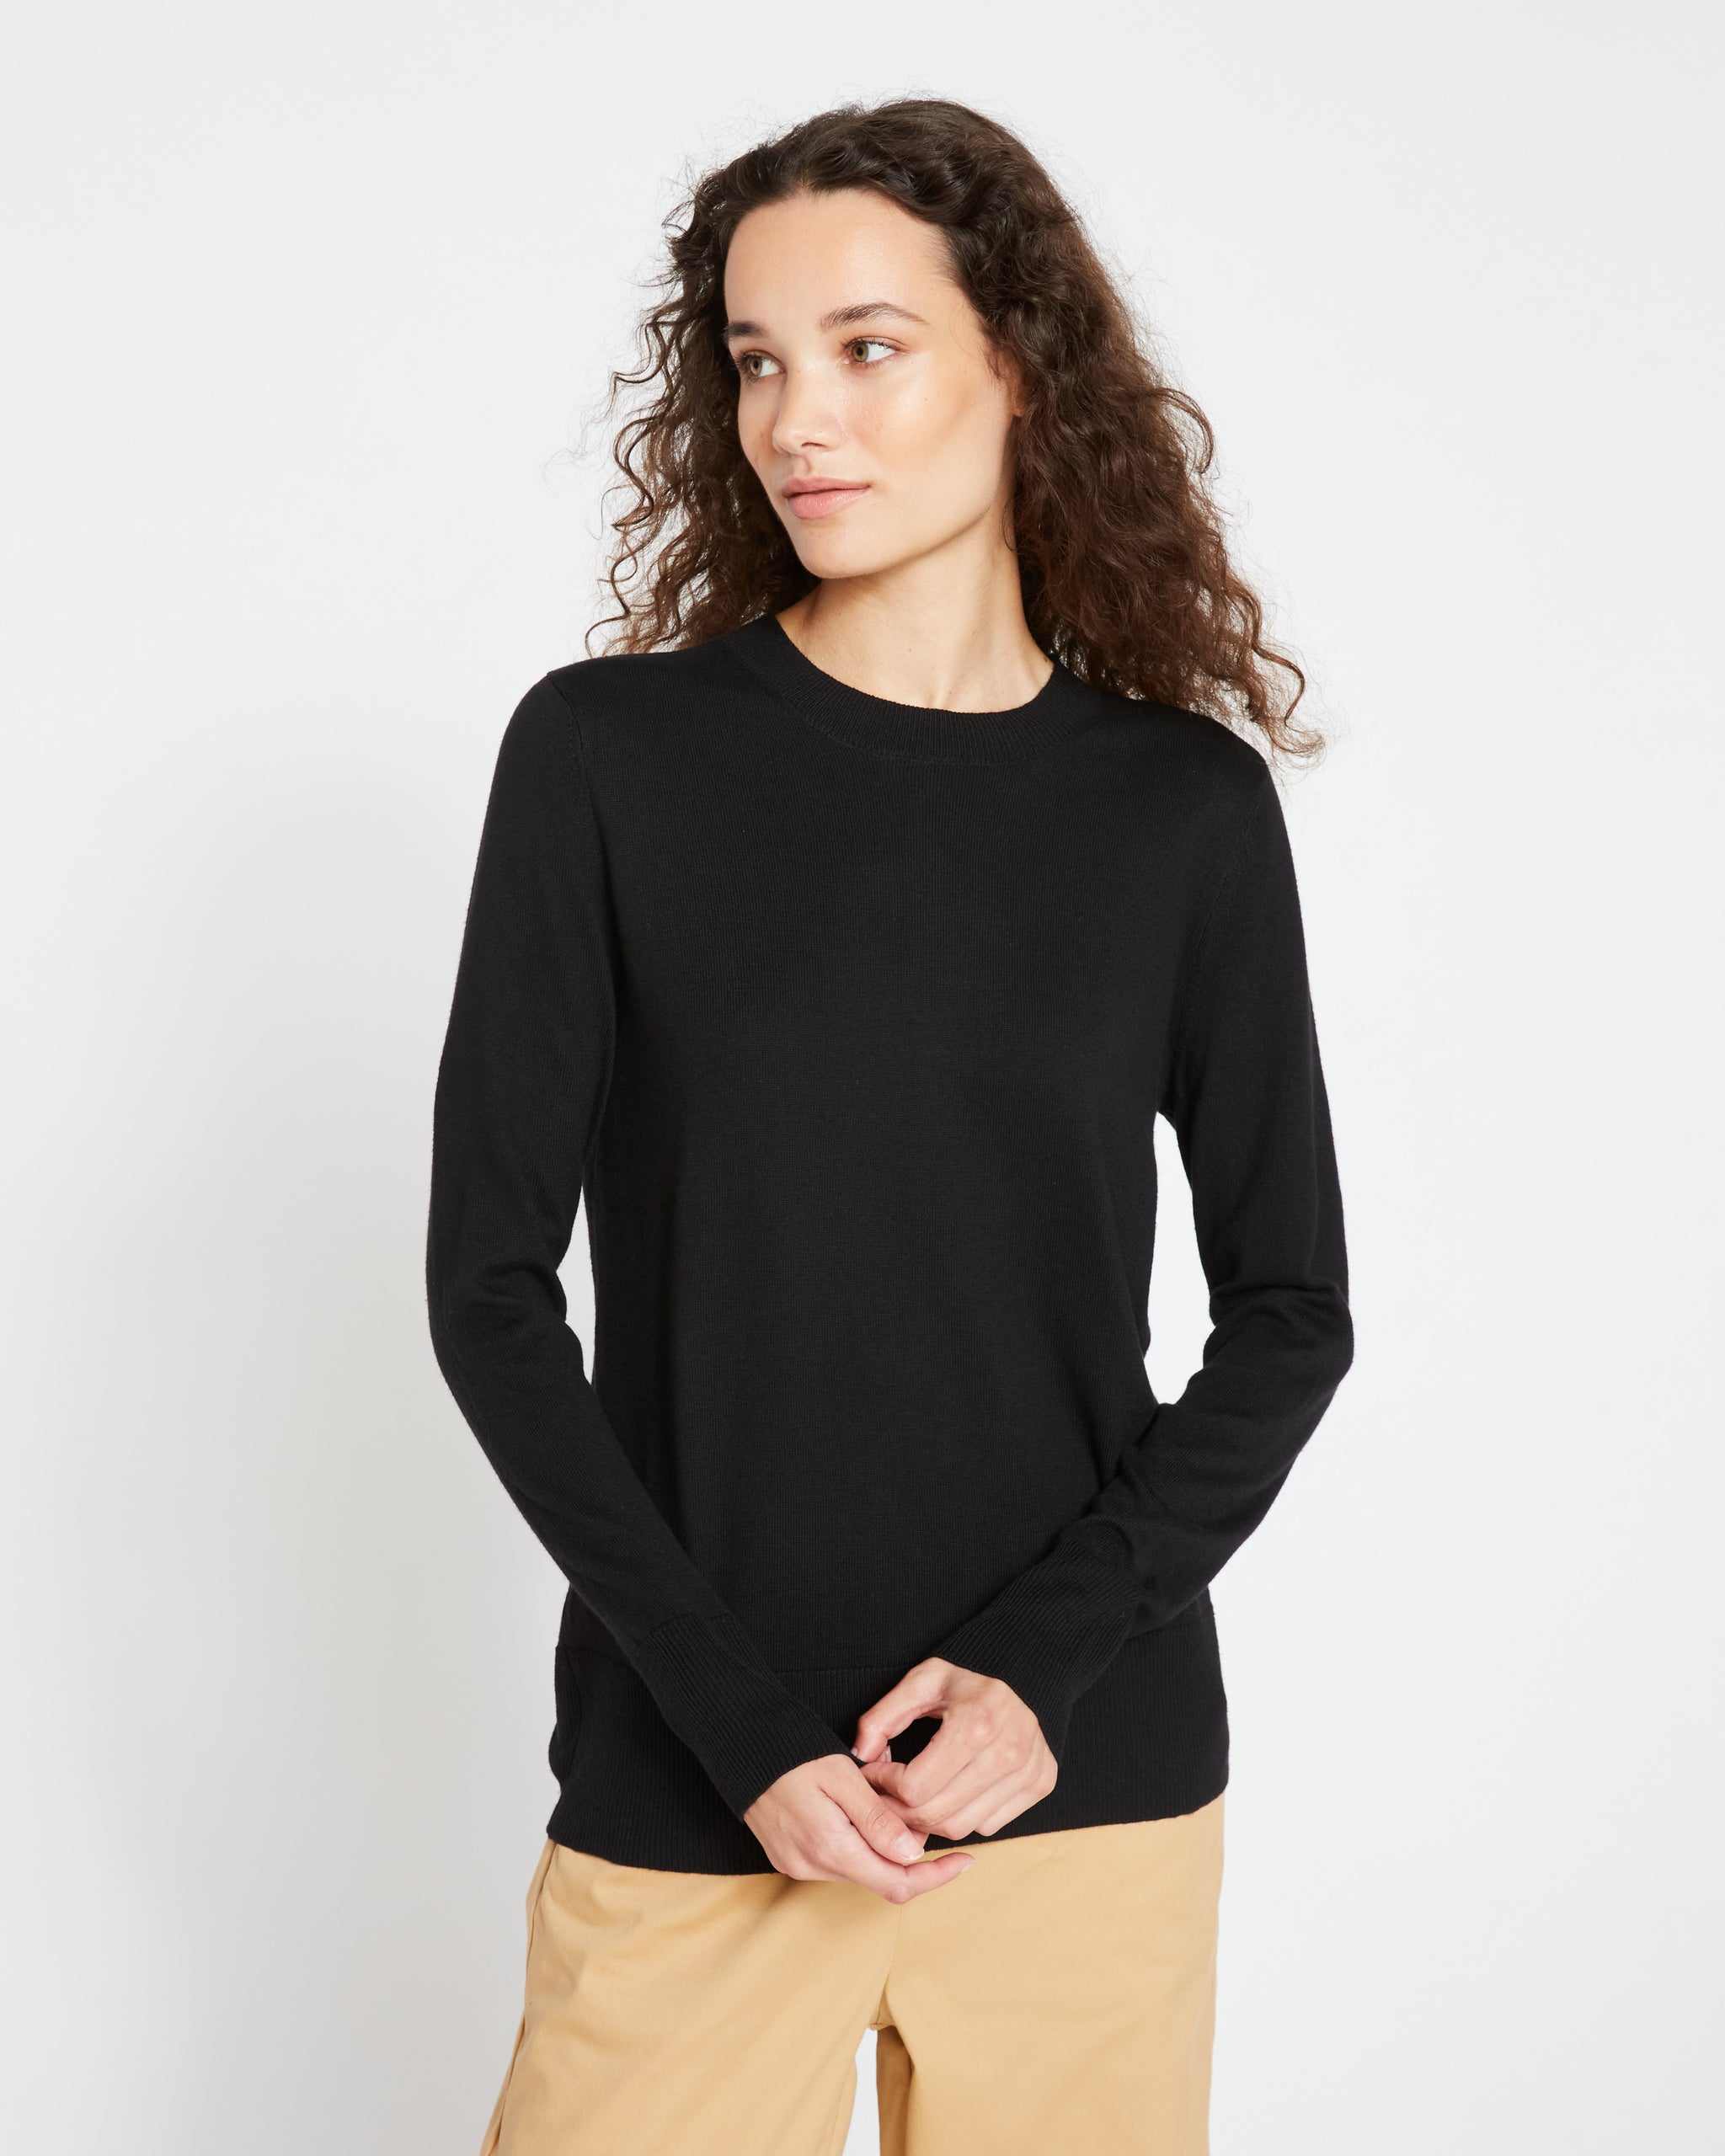 Chloe Crew Neck Sweater - Black | Universal Standard